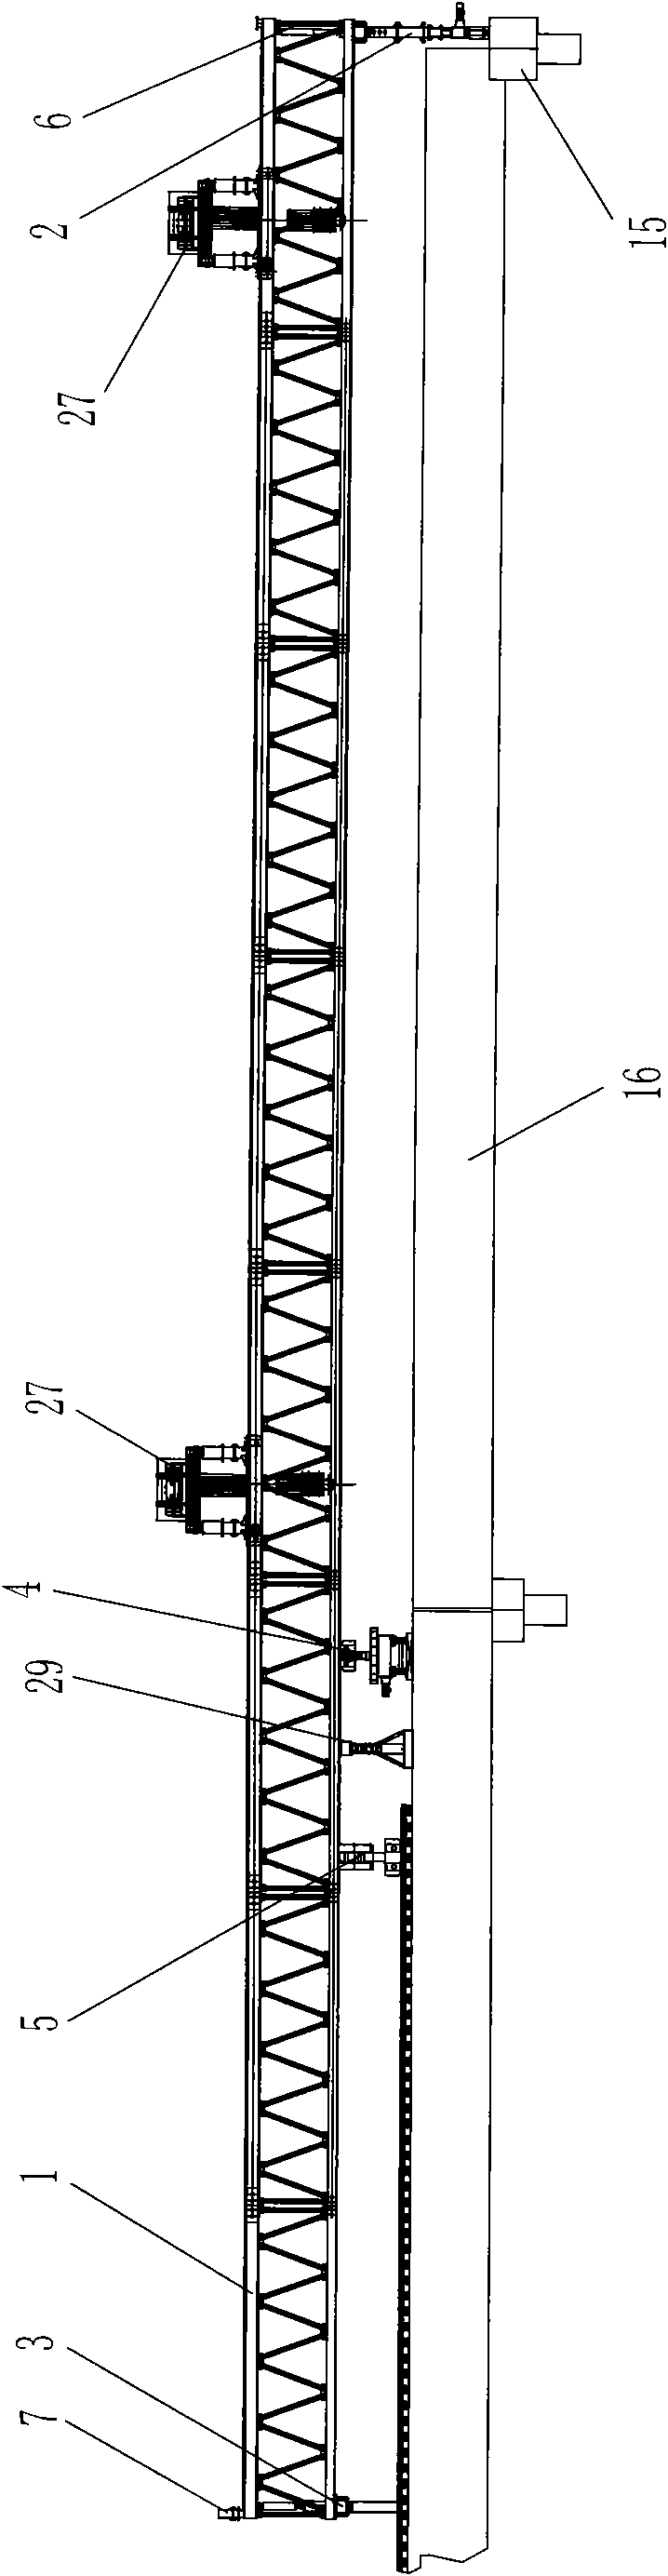 Highway double-guide-beam bridge erecting machine and turning method